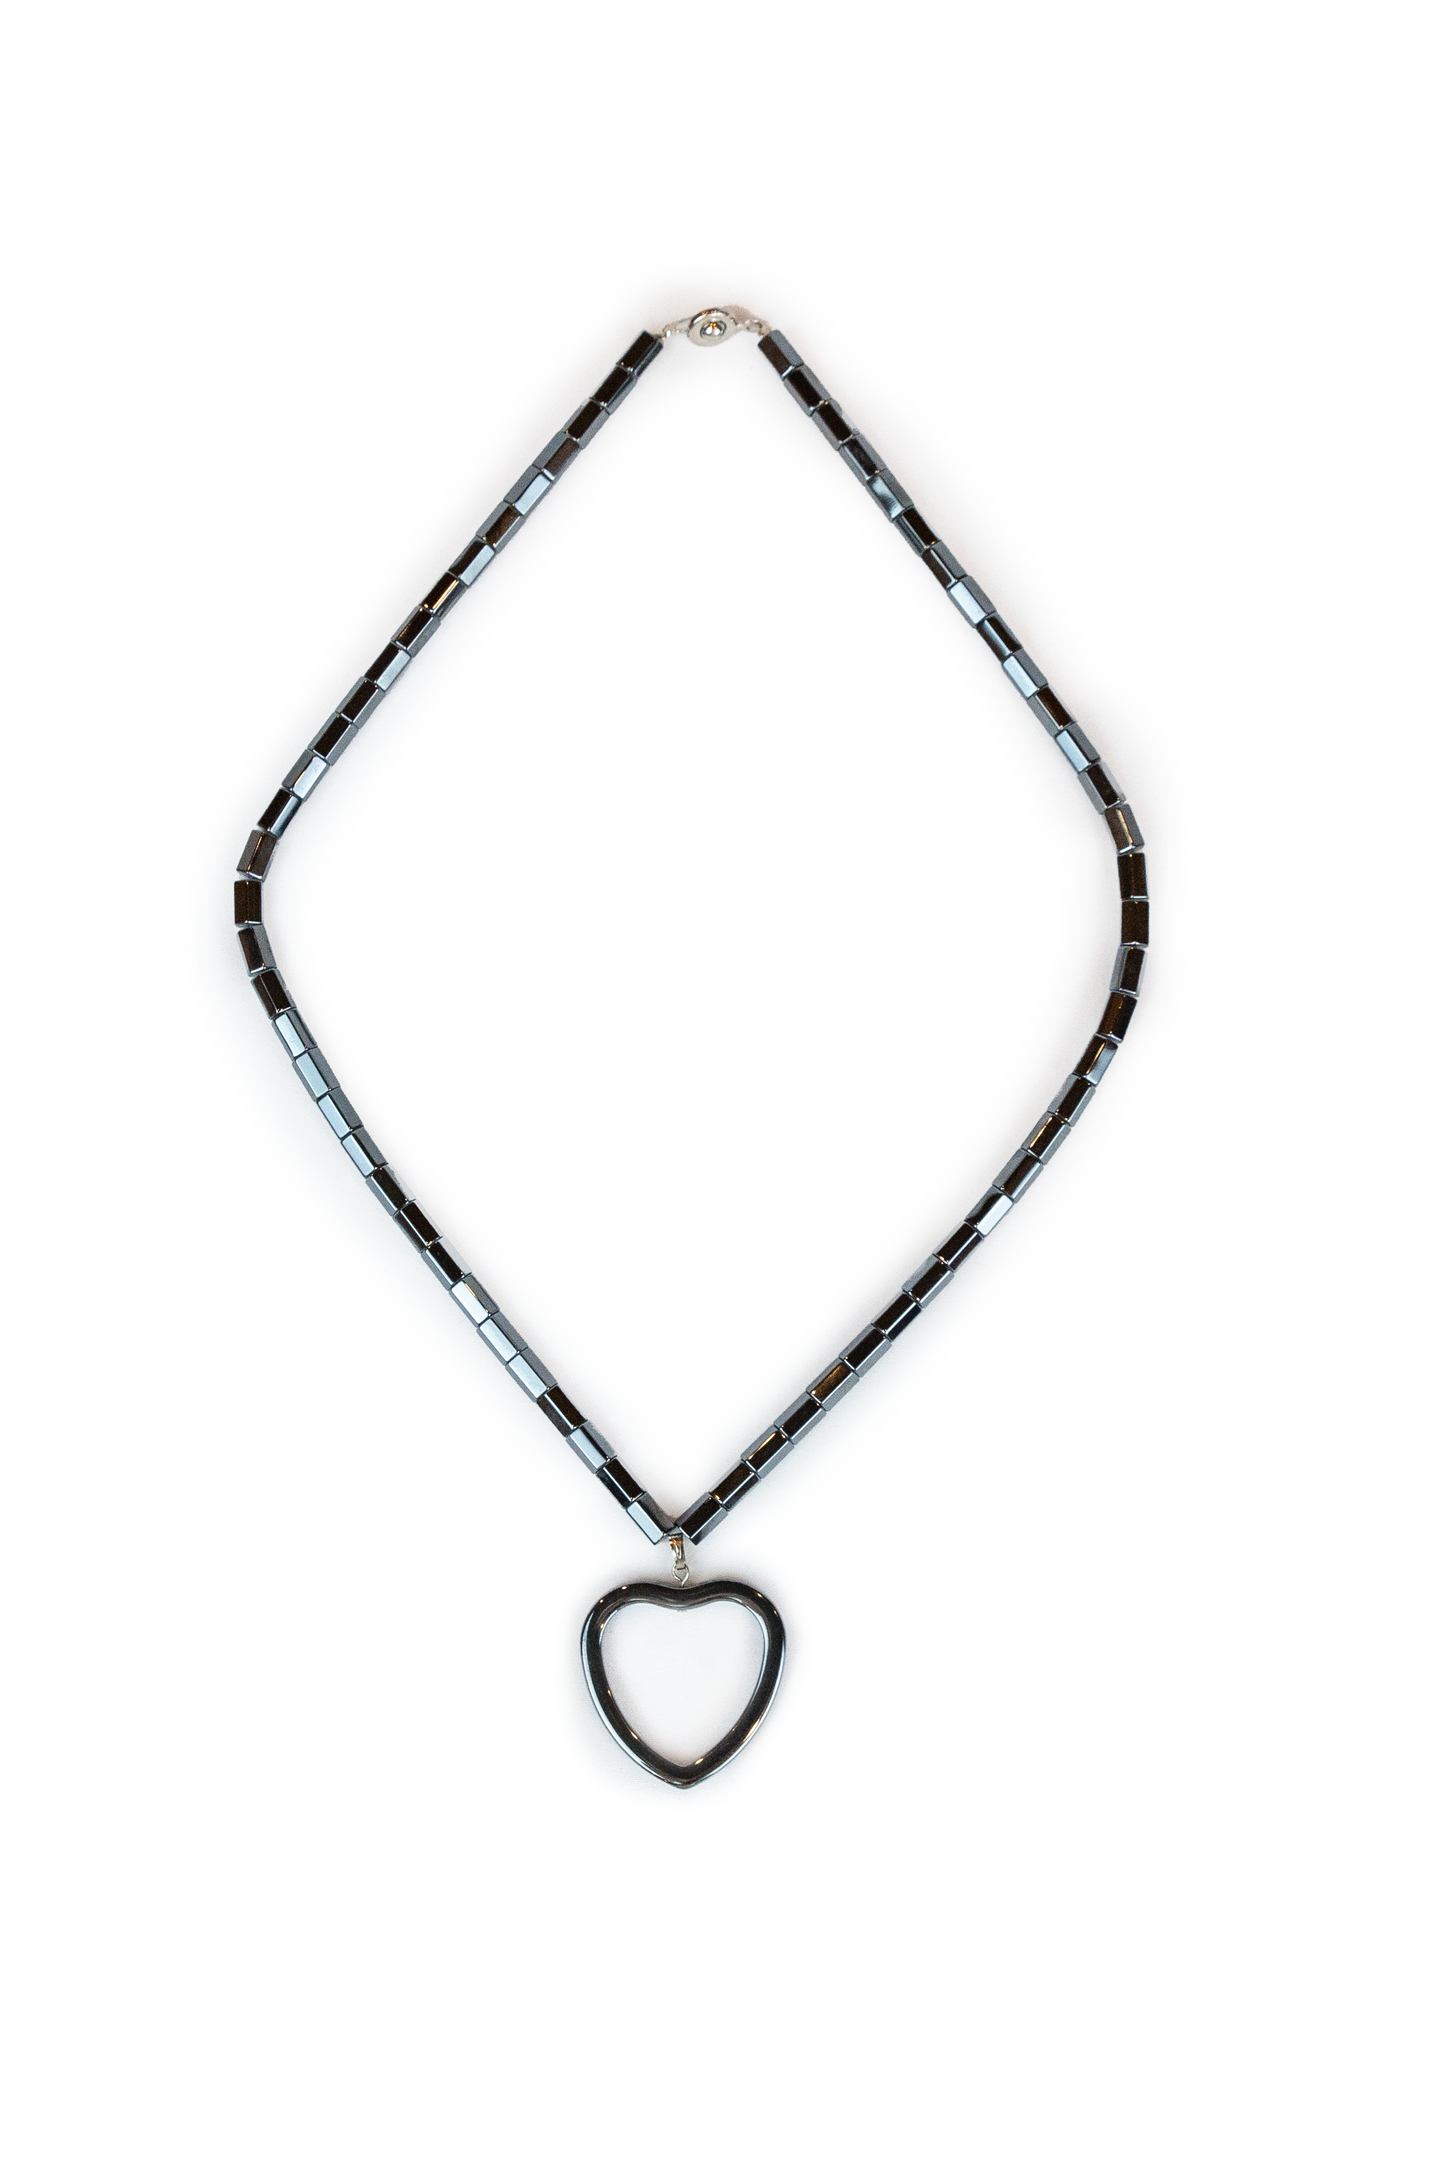 Hematite Heart Necklace